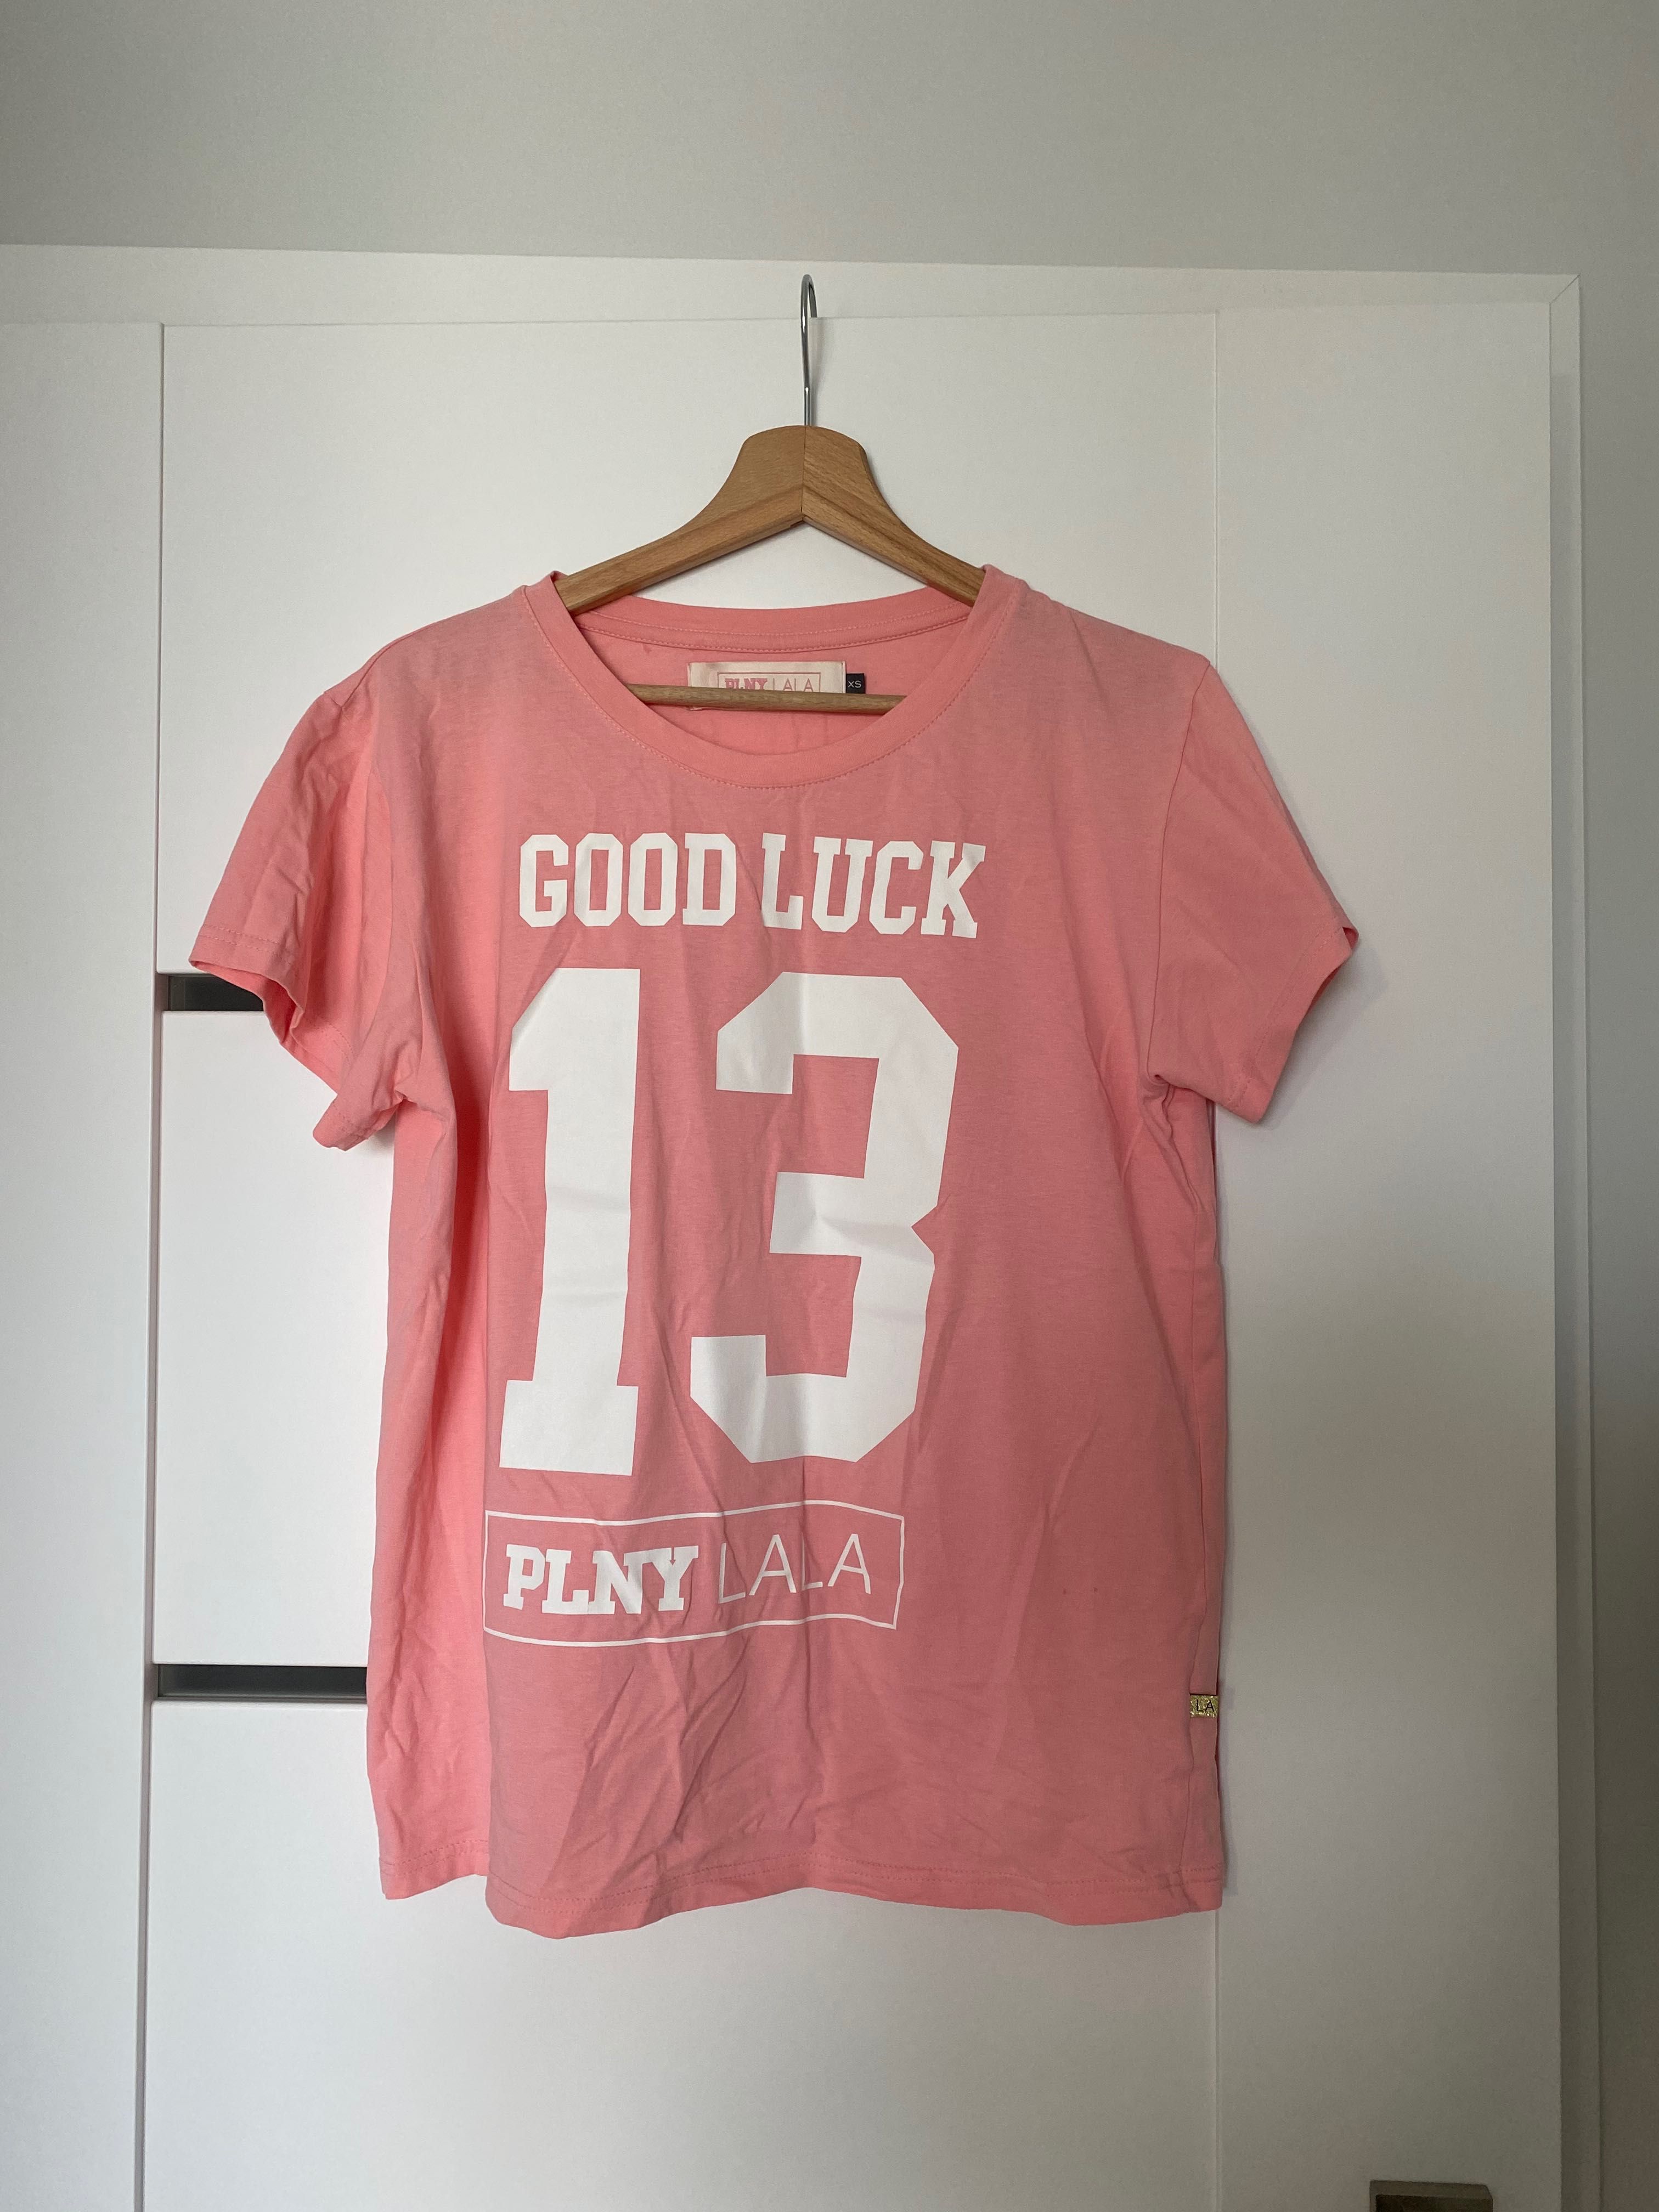 Plny lala good luck 13 koszulka bluza warszawska sala nowa xxs